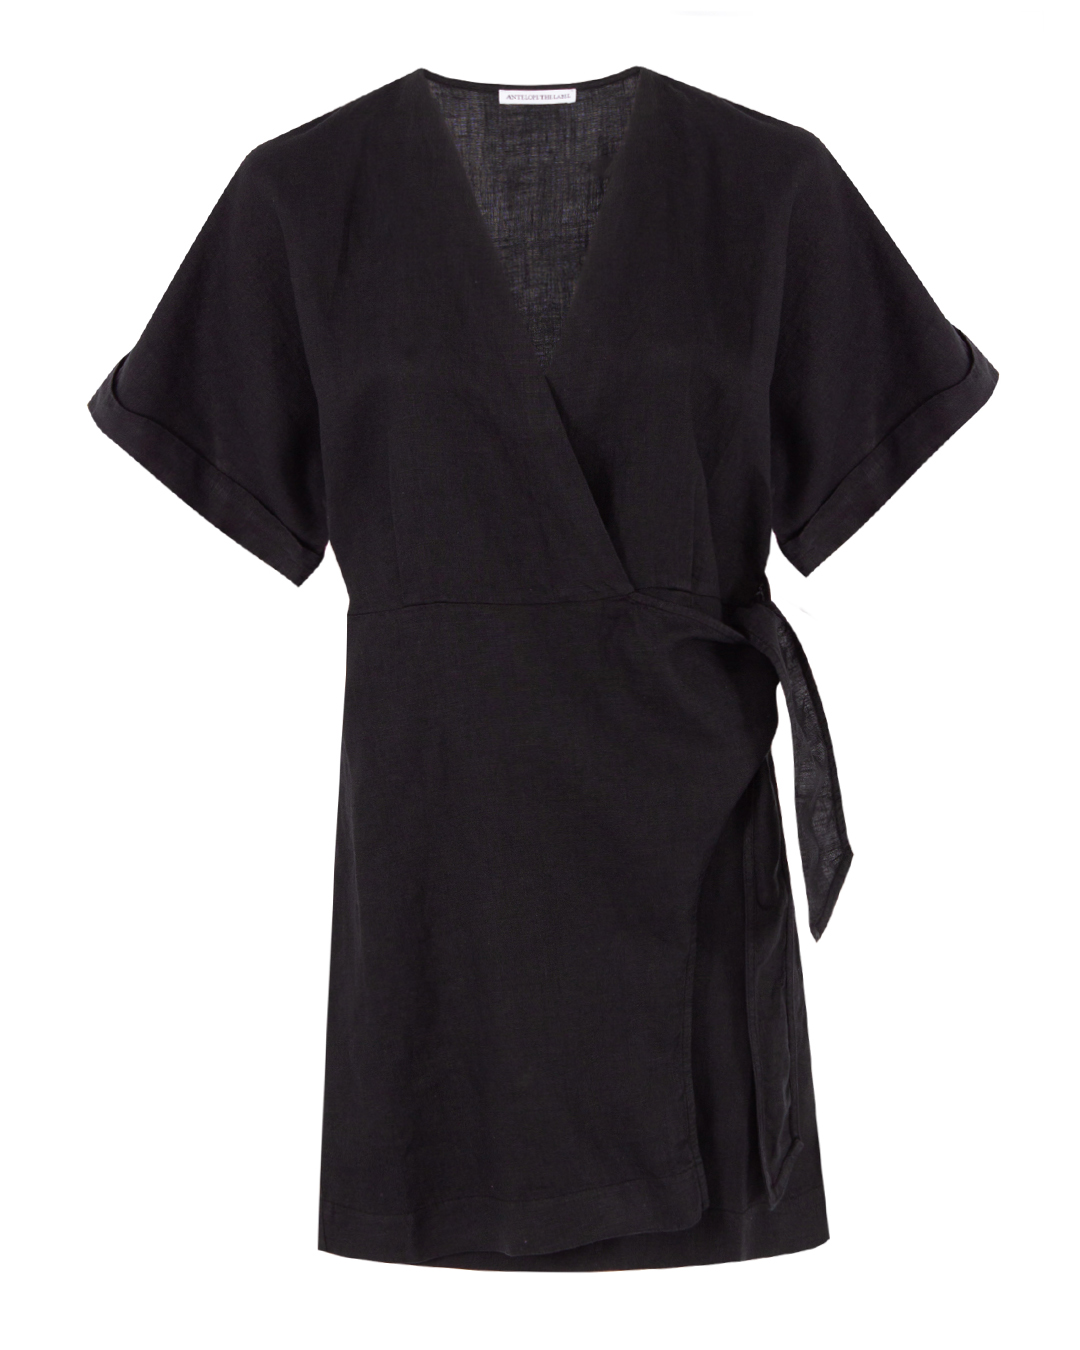 платье ANTELOPE THE LABEL D1.BLACK черный m/l, размер m/l D1.BLACK черный m/l - фото 1